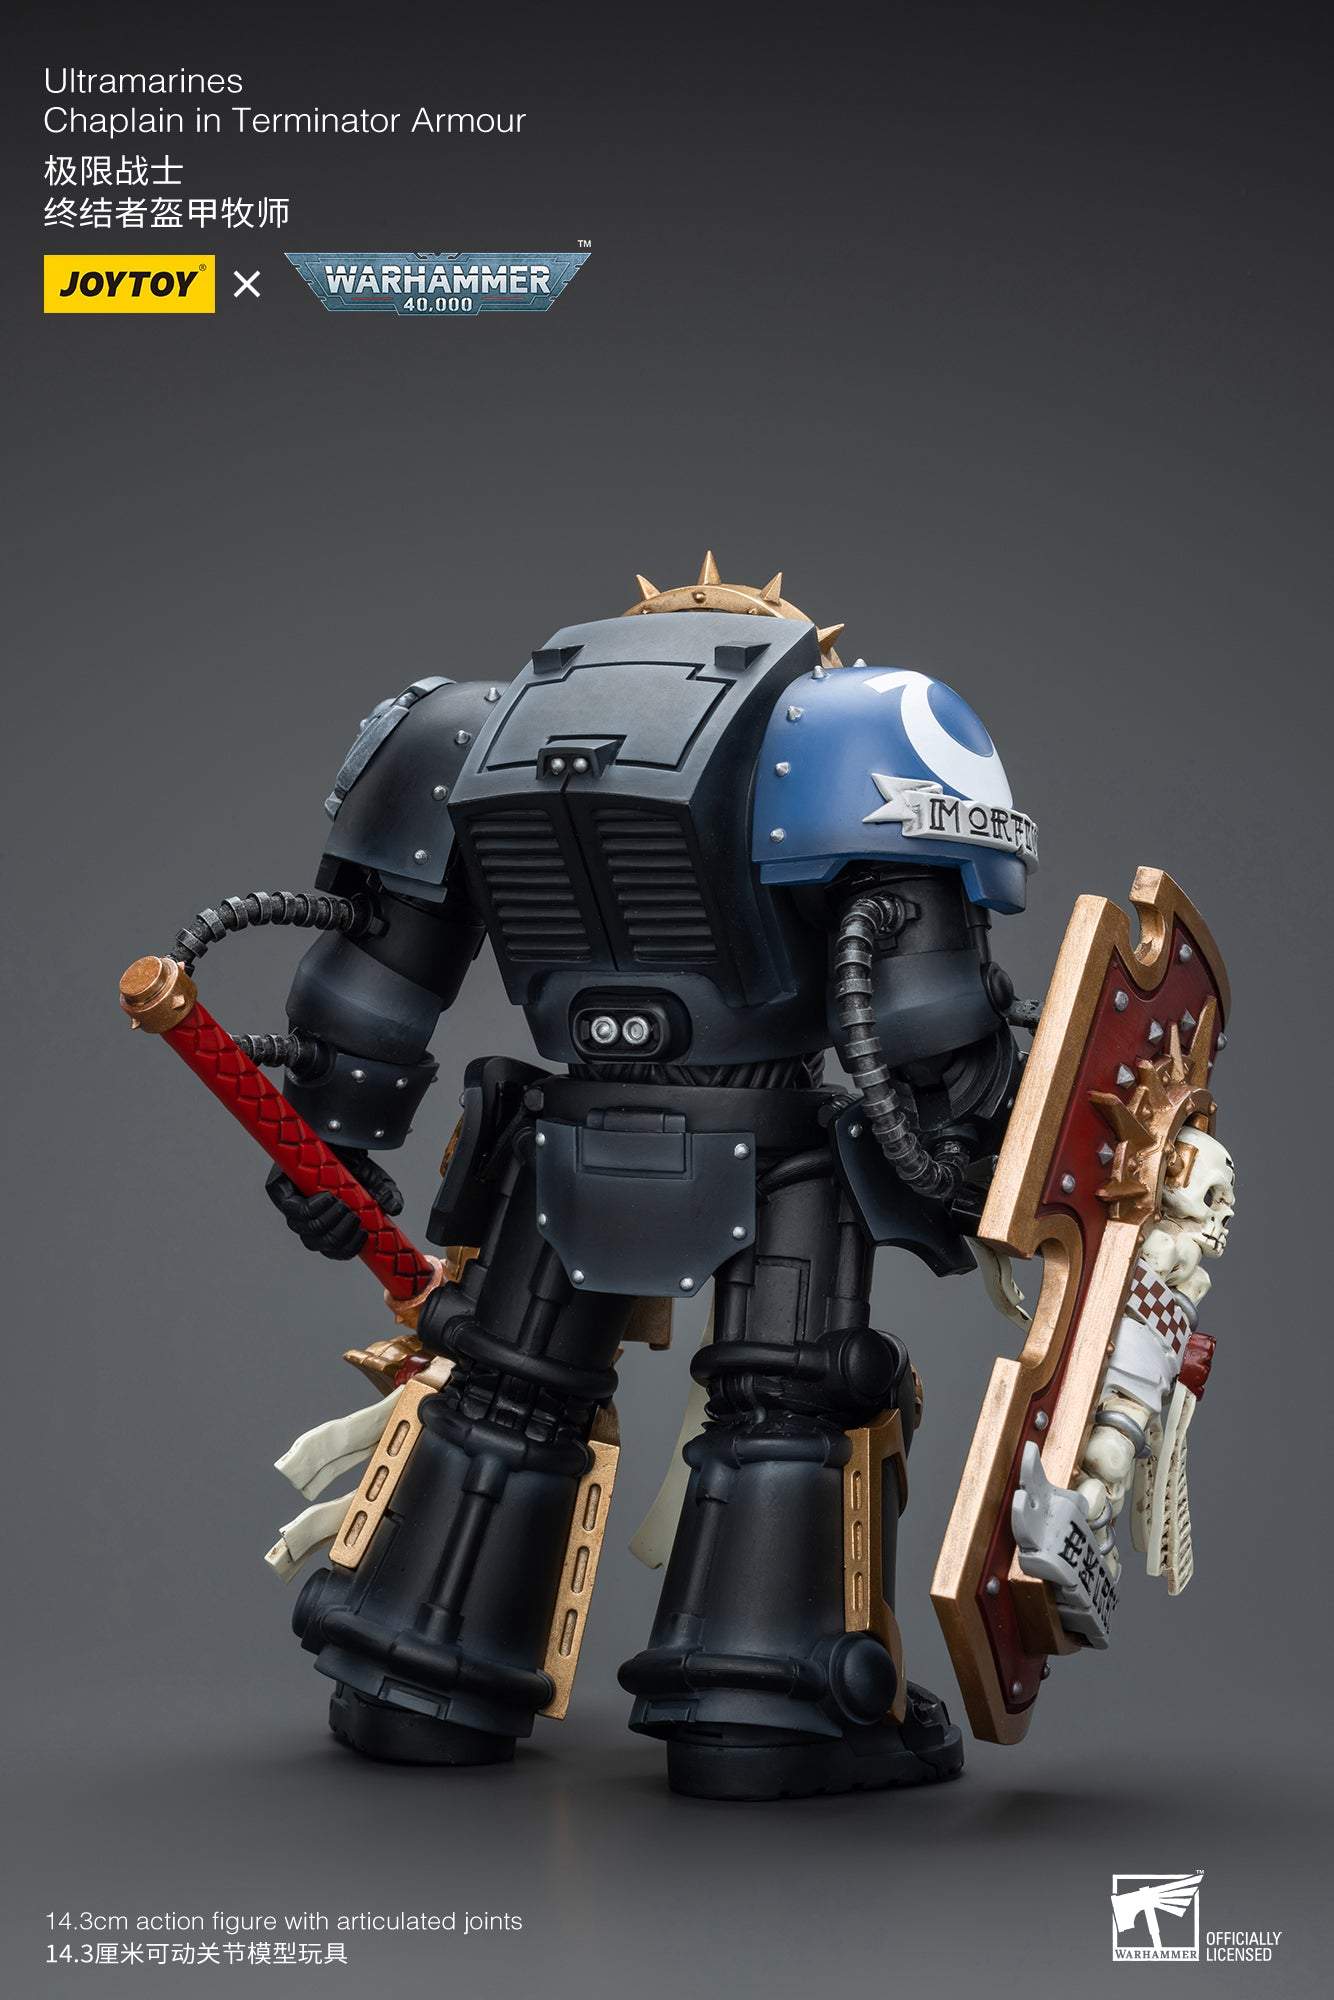 Ultramarines Chaplain in Terminator Armour - Warhammer 40K Action Figure By JOYTOY